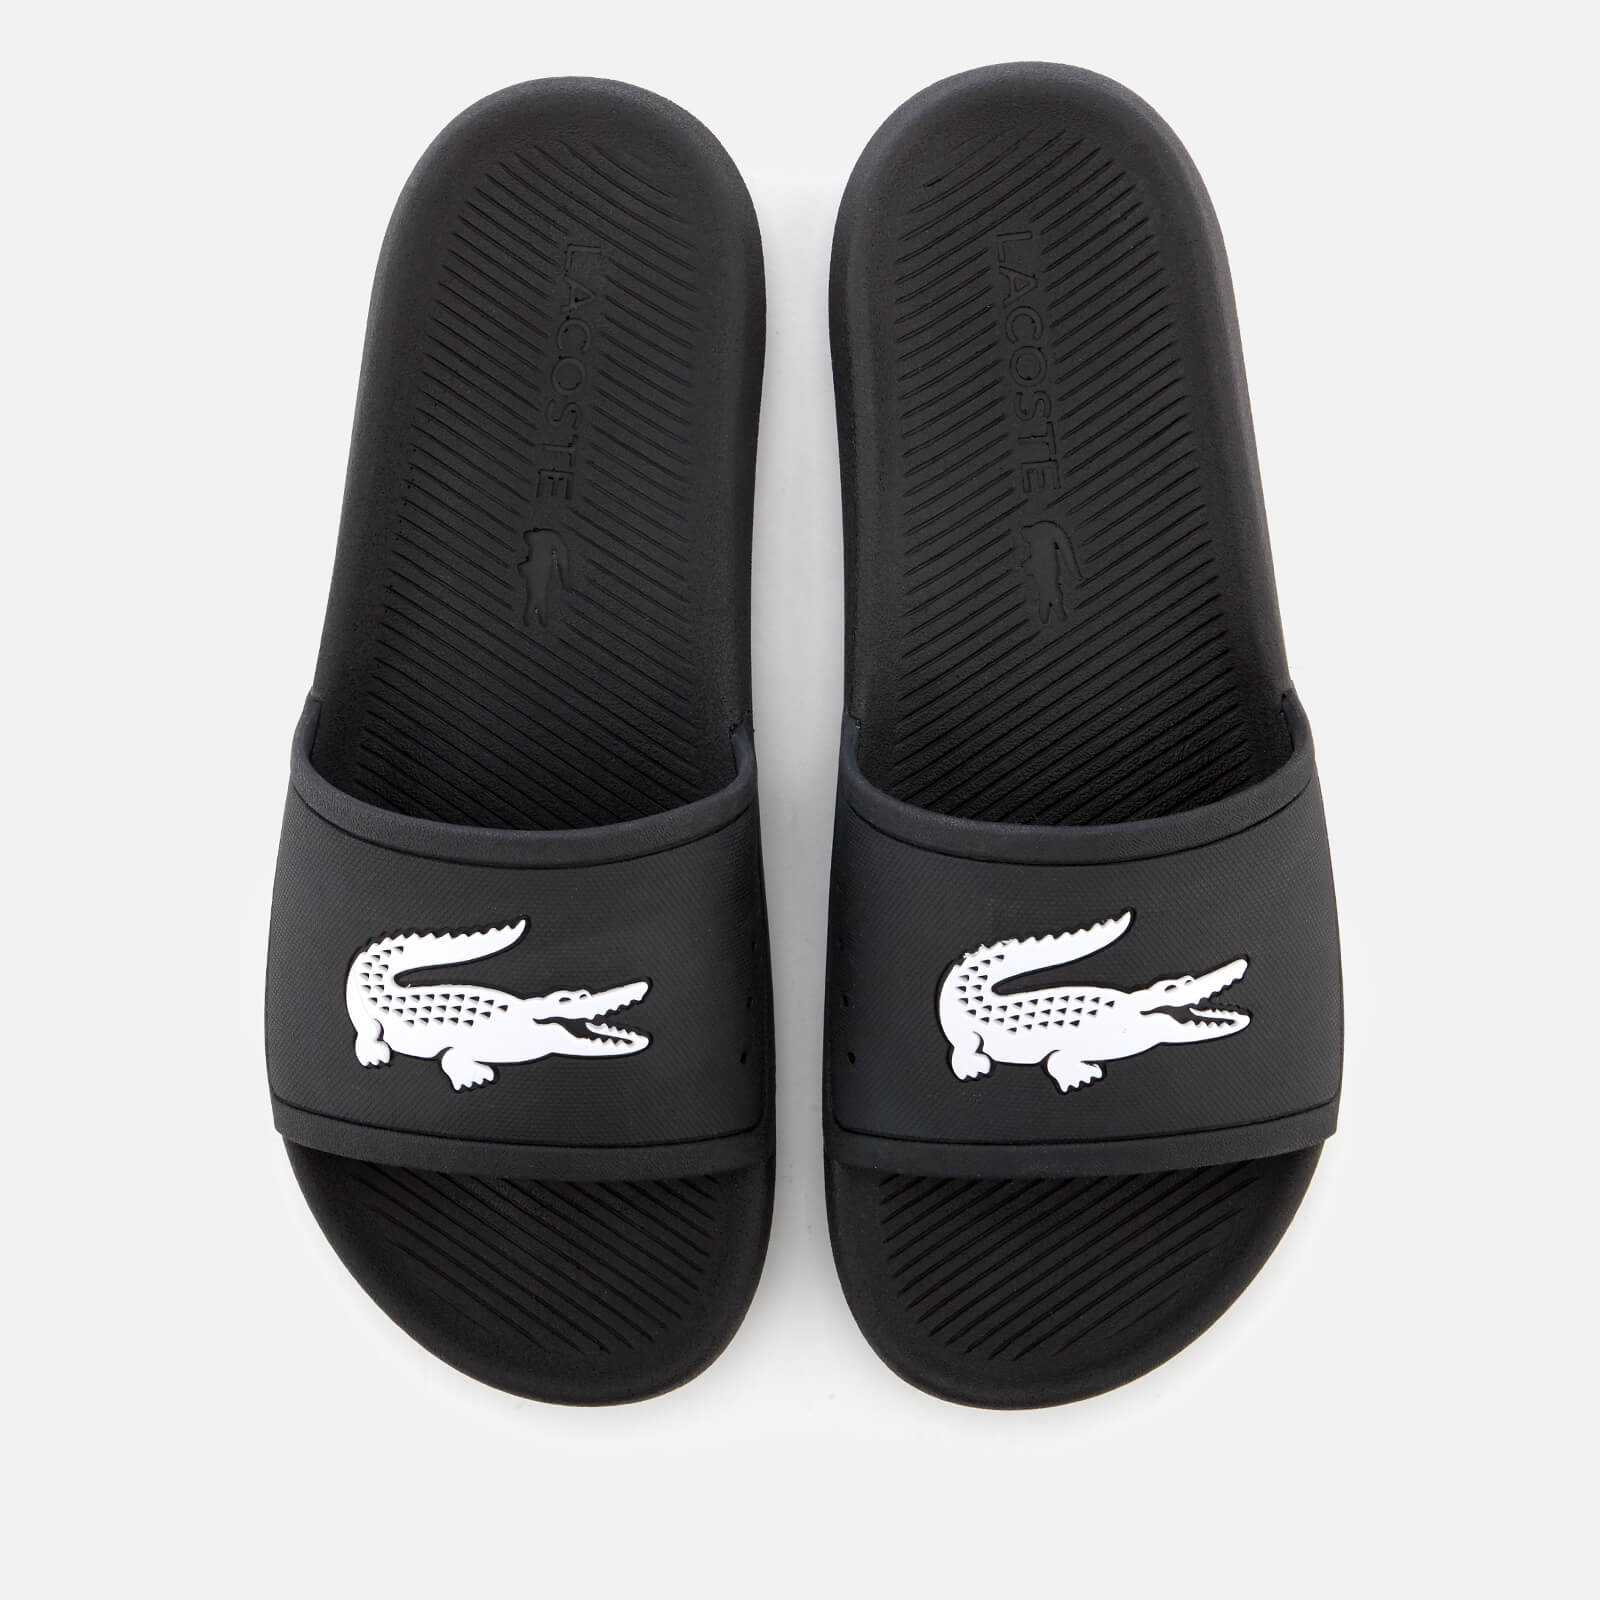 Lacoste Men's Croco Slide 119 1 Sandals - Black/White - UK 8 - Black/White